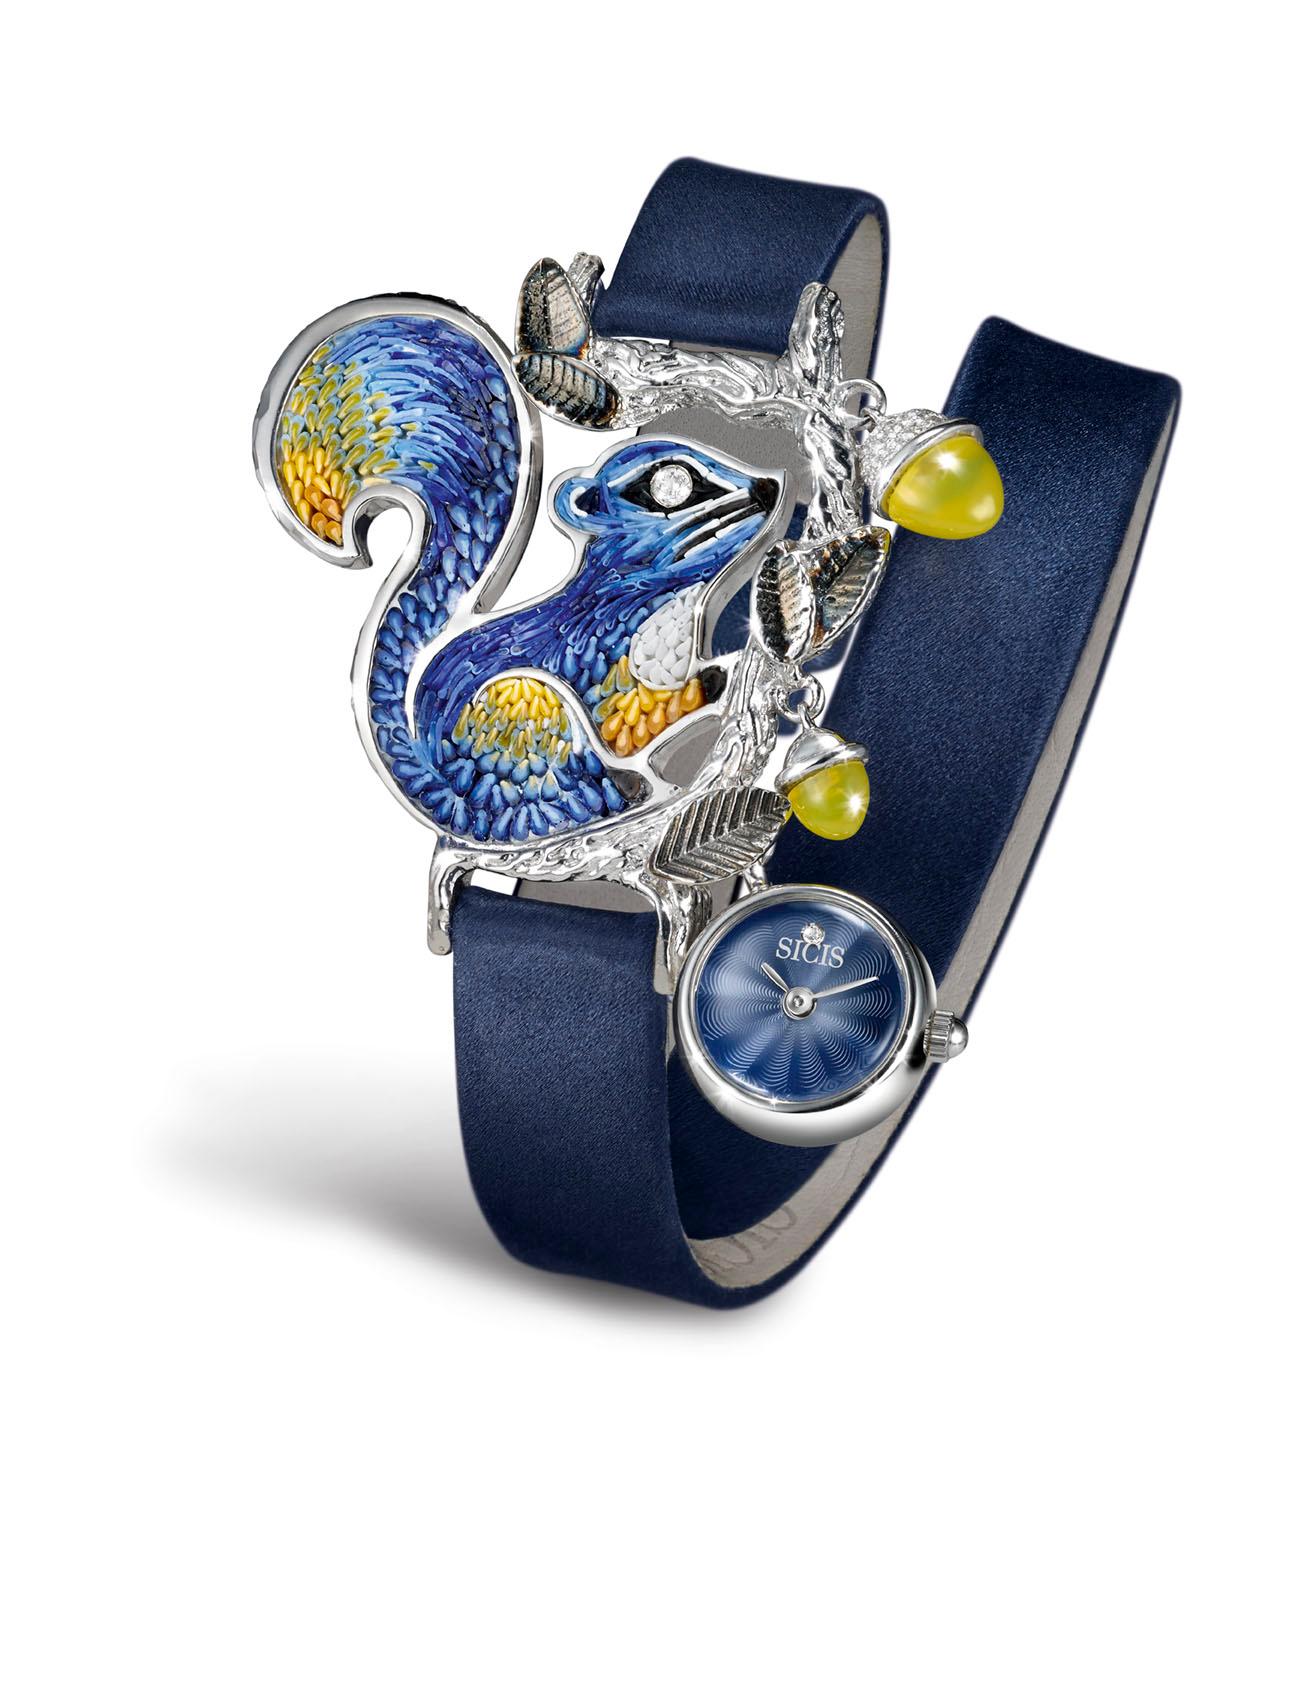 mosaic dial watch